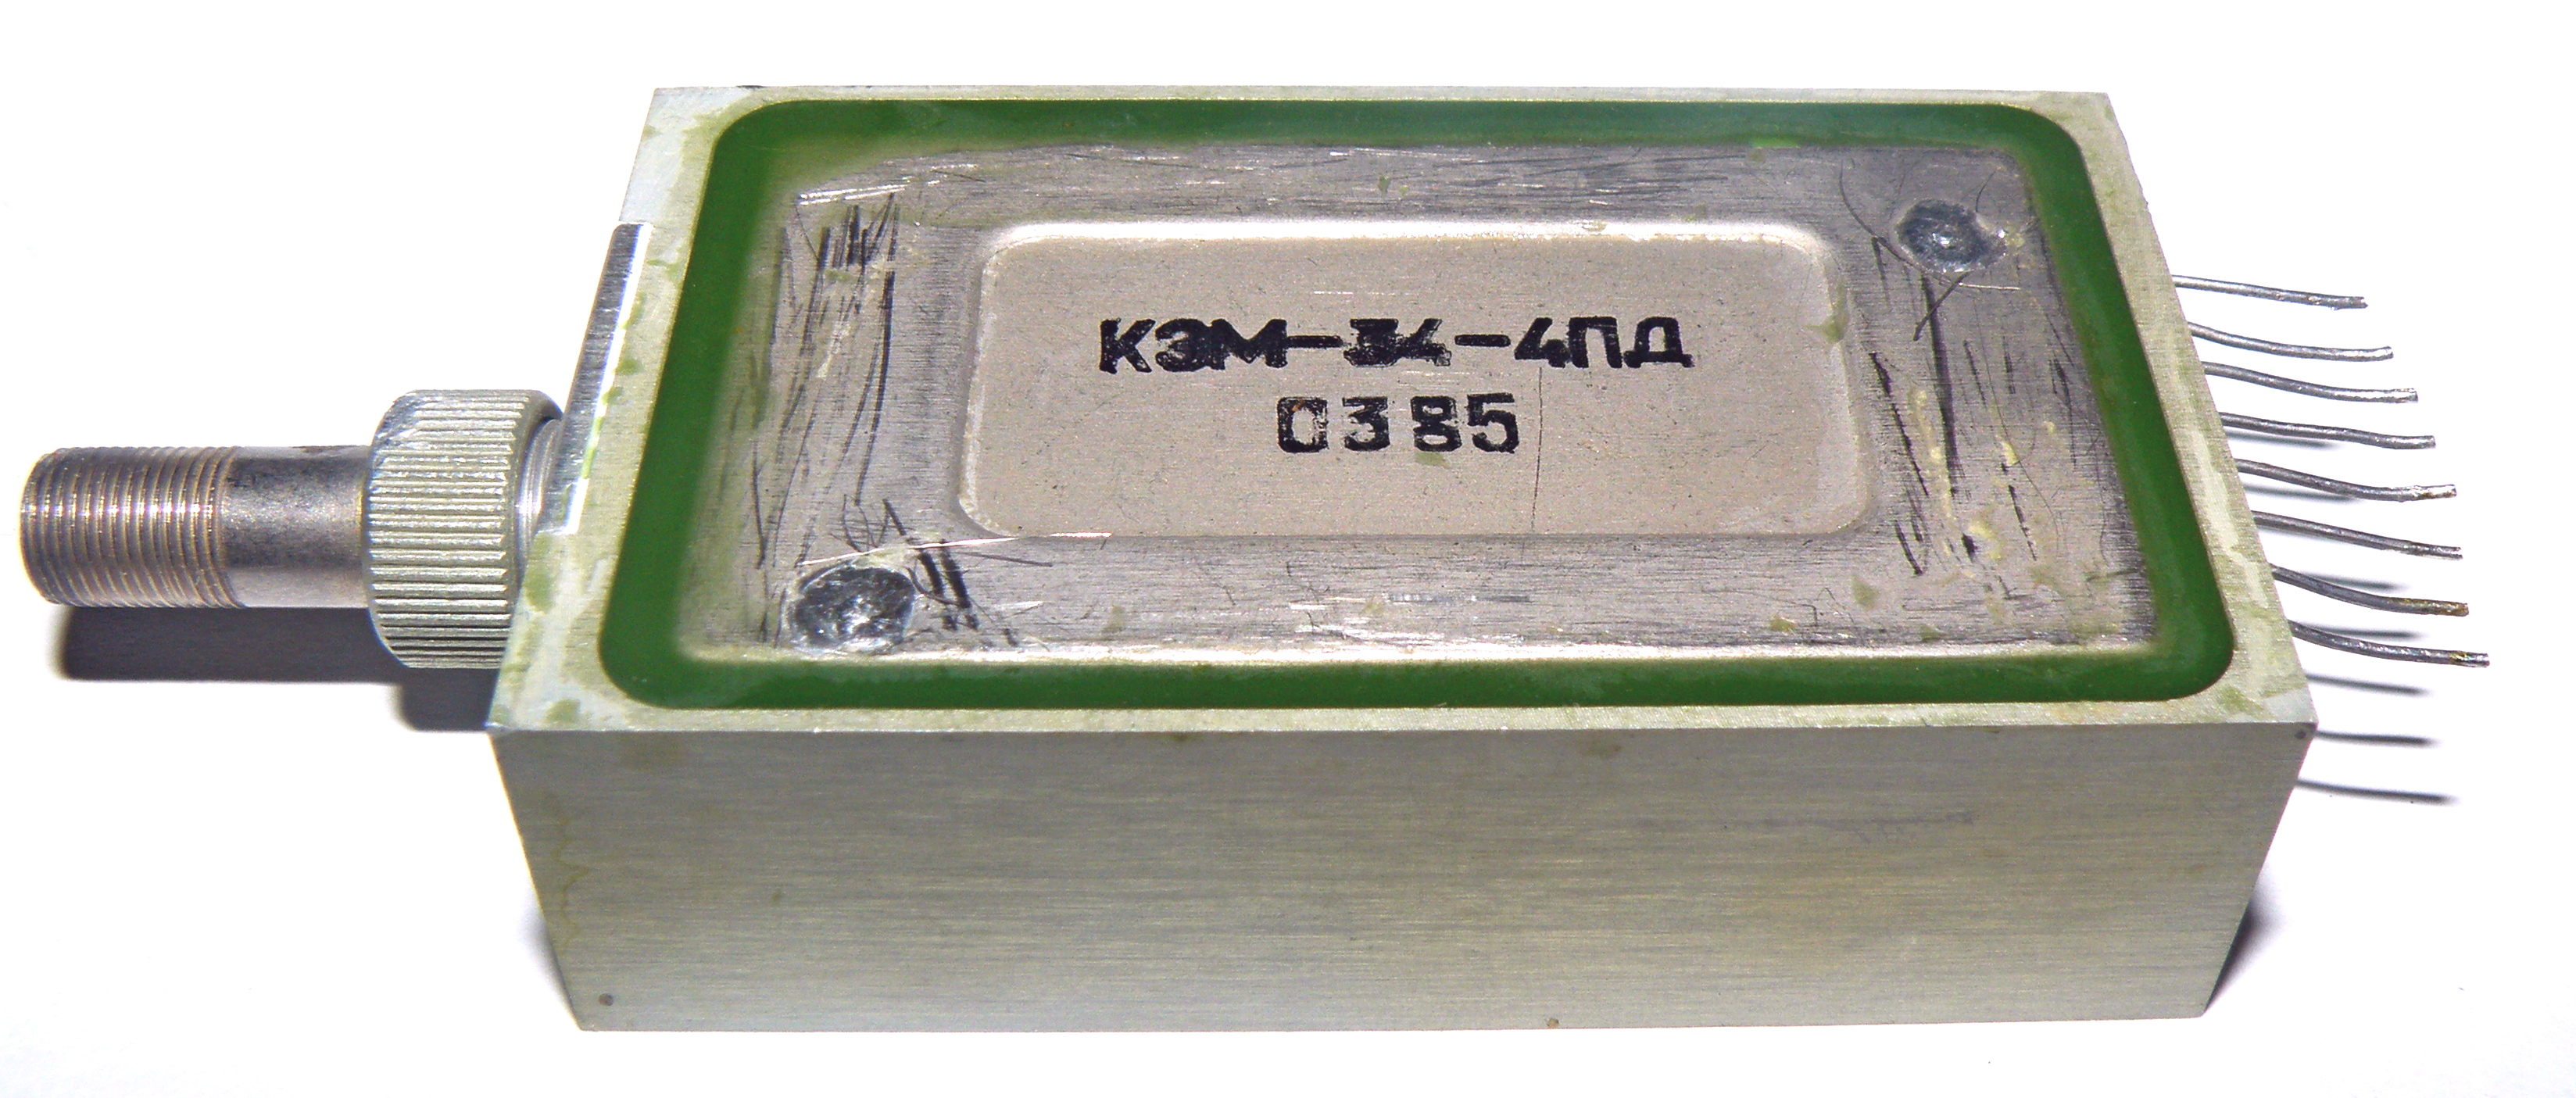 КЭМ-34-4ПД 3